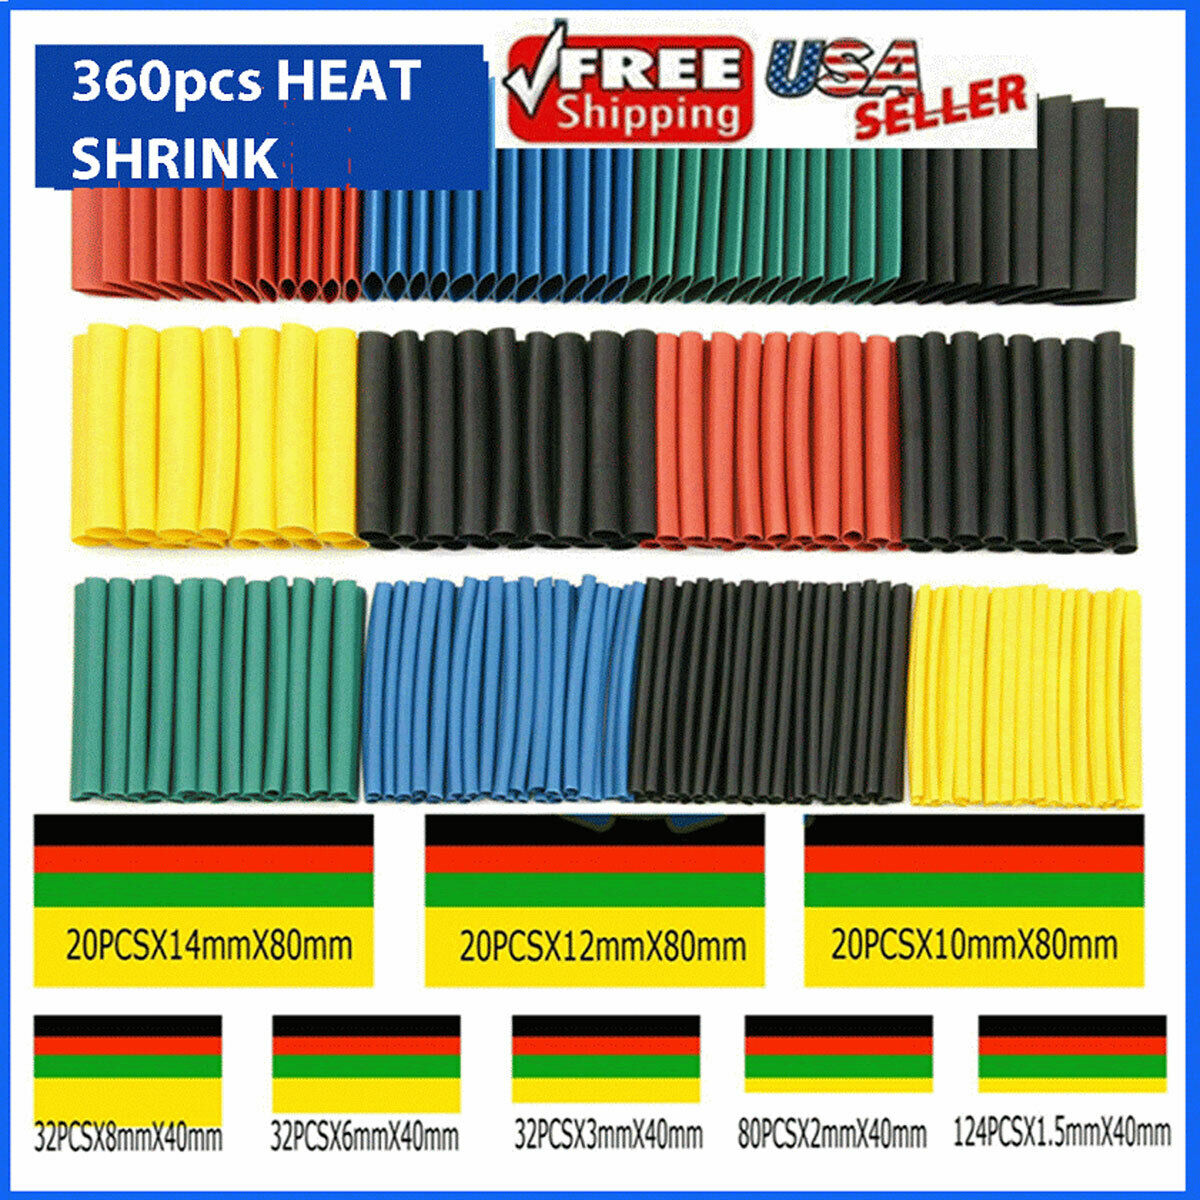 360Pcs Heat Shrink Tubing Insulation Shrinkable Tube 2:1 Wire Cable Sleeve Kit 